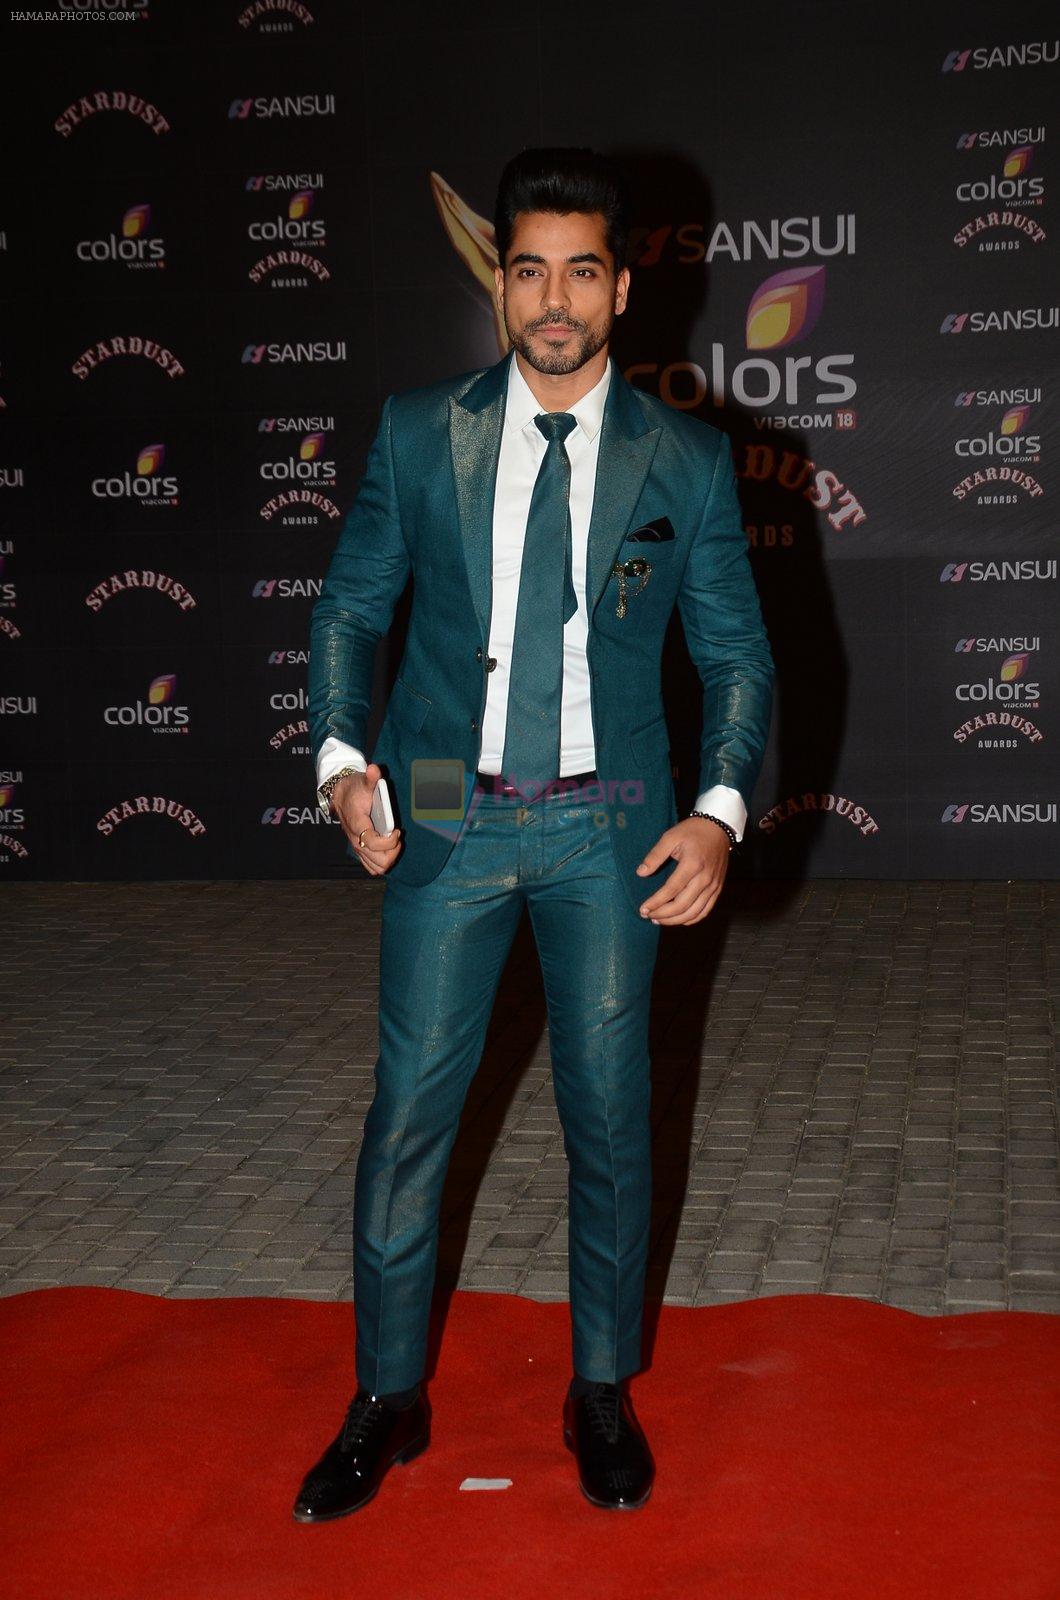 Gautam Gulati at the red carpet of Stardust awards on 21st Dec 2015